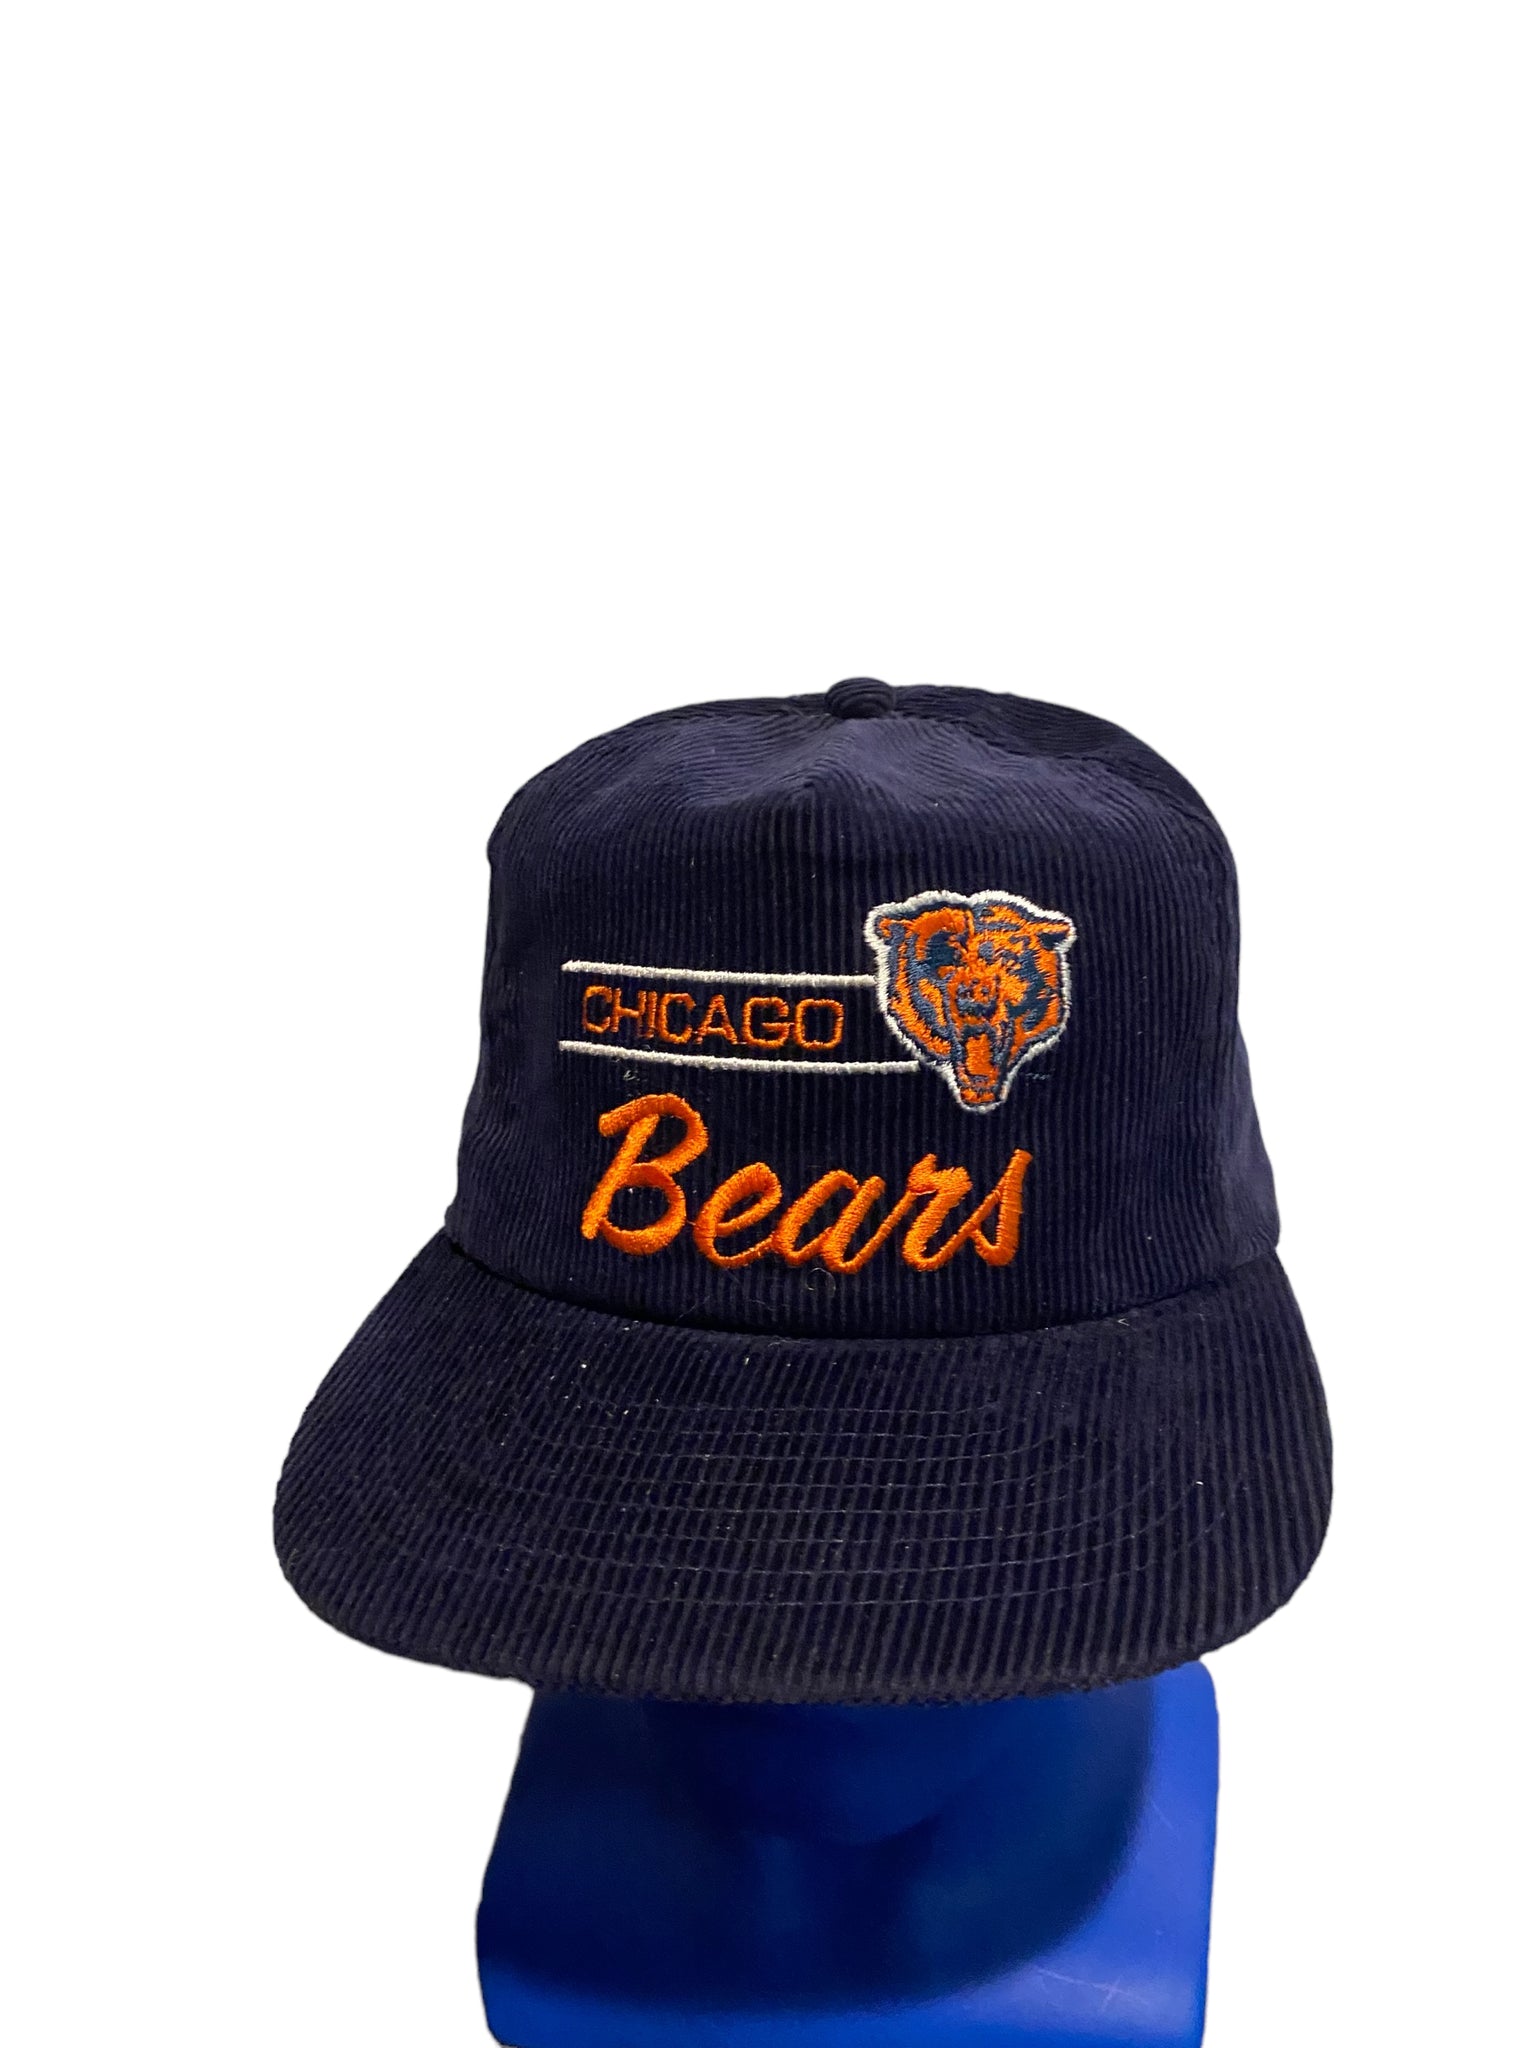 Vintage annco nfl chicago bears corduroy hat snapback